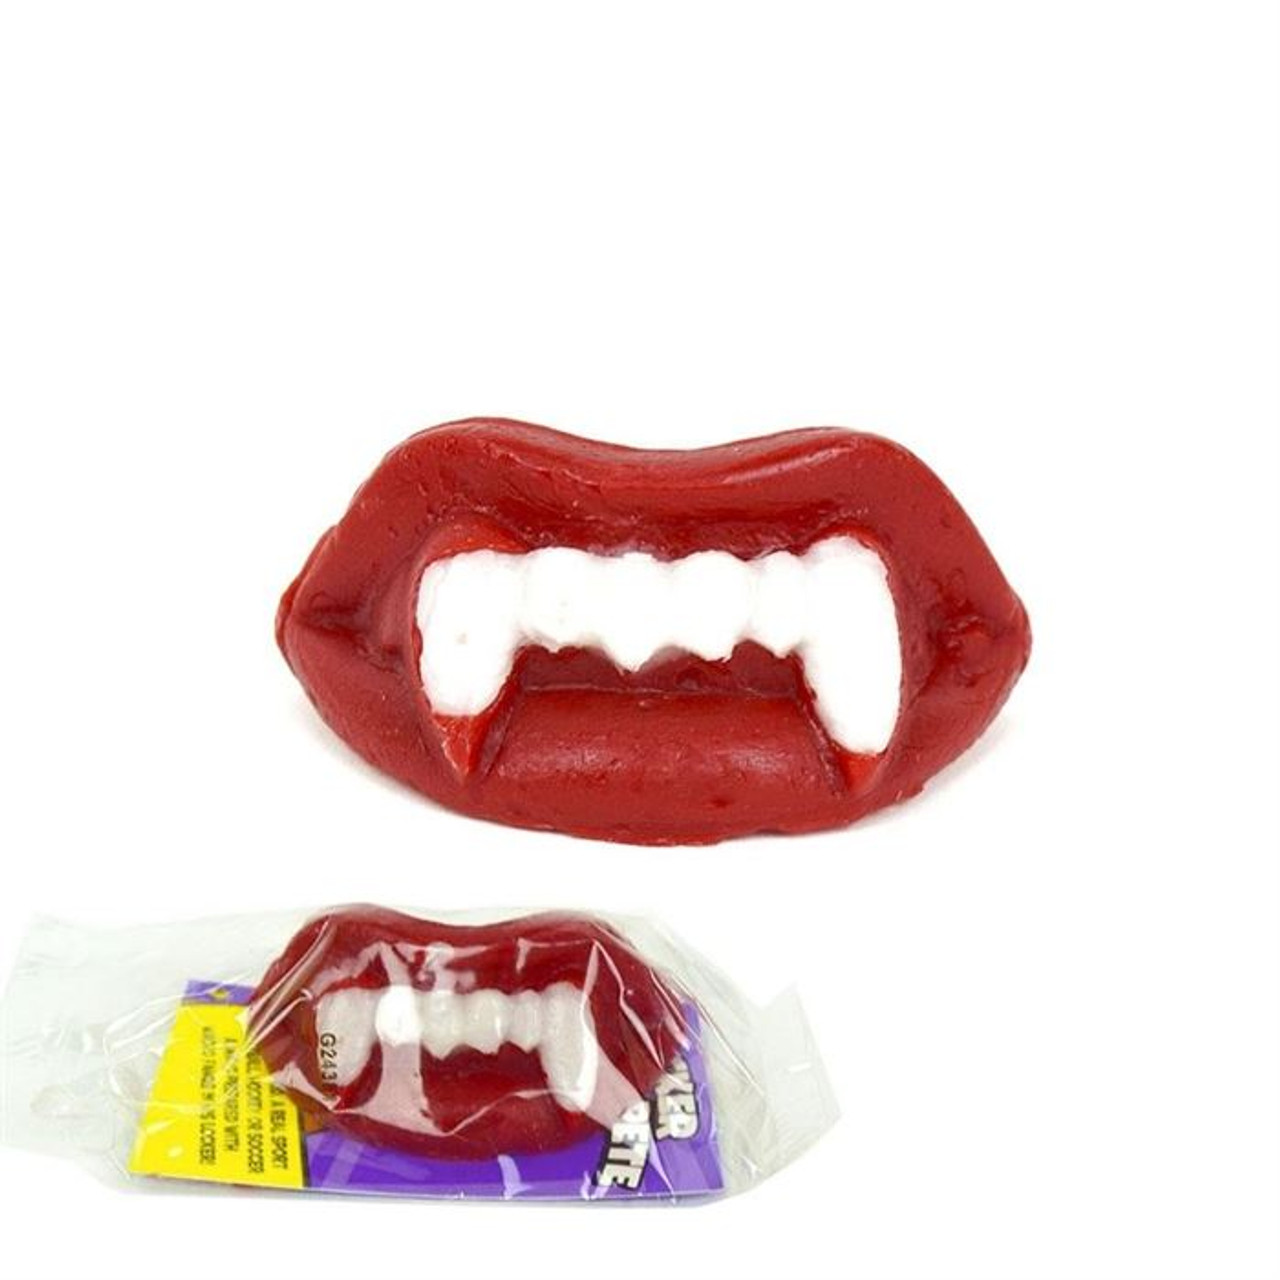 Wack O Wax Cherry Wax Lips - 24 / Box - Candy Favorites